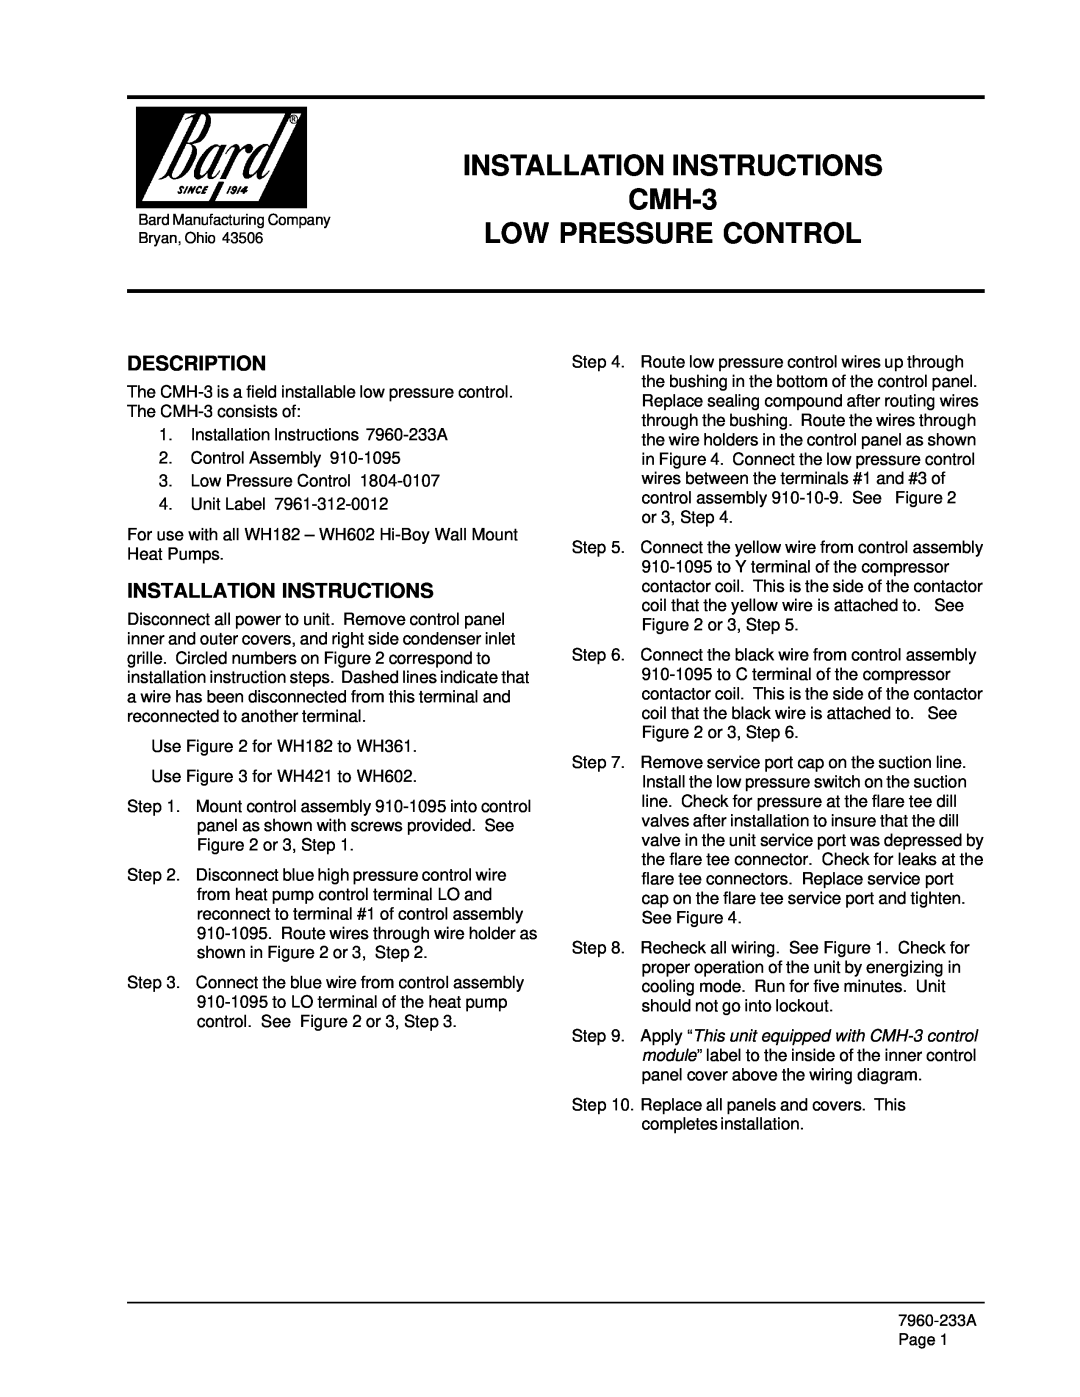 Bard installation instructions INSTALLATION INSTRUCTIONS CMH-3, Low Pressure Control, Description 